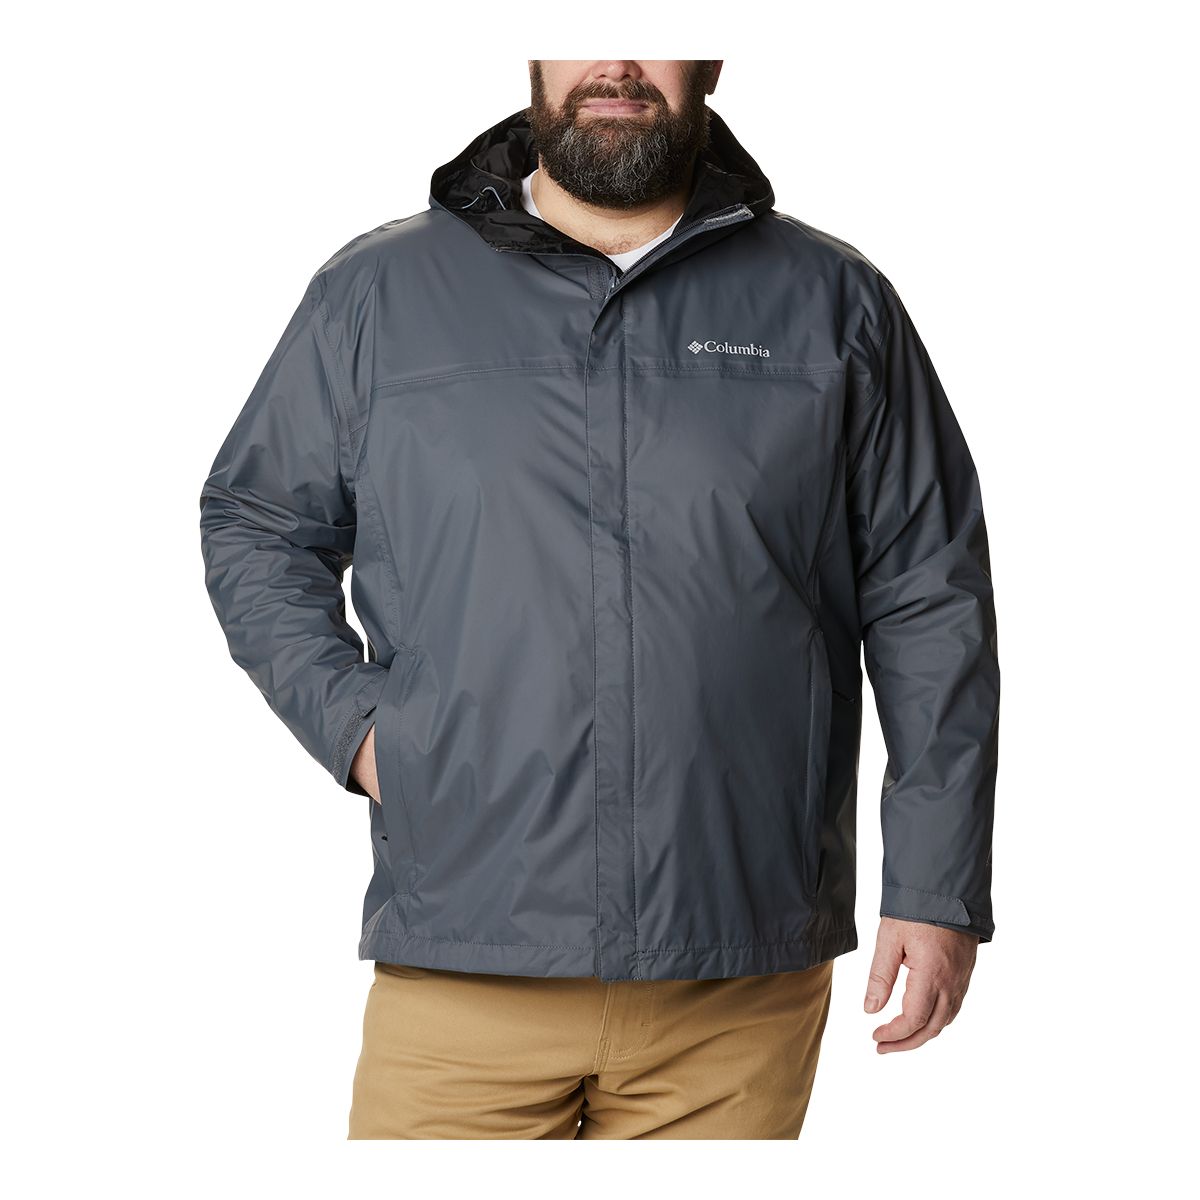 Image of Columbia Men's Watertight II Waterproof Breathable Rain Jacket